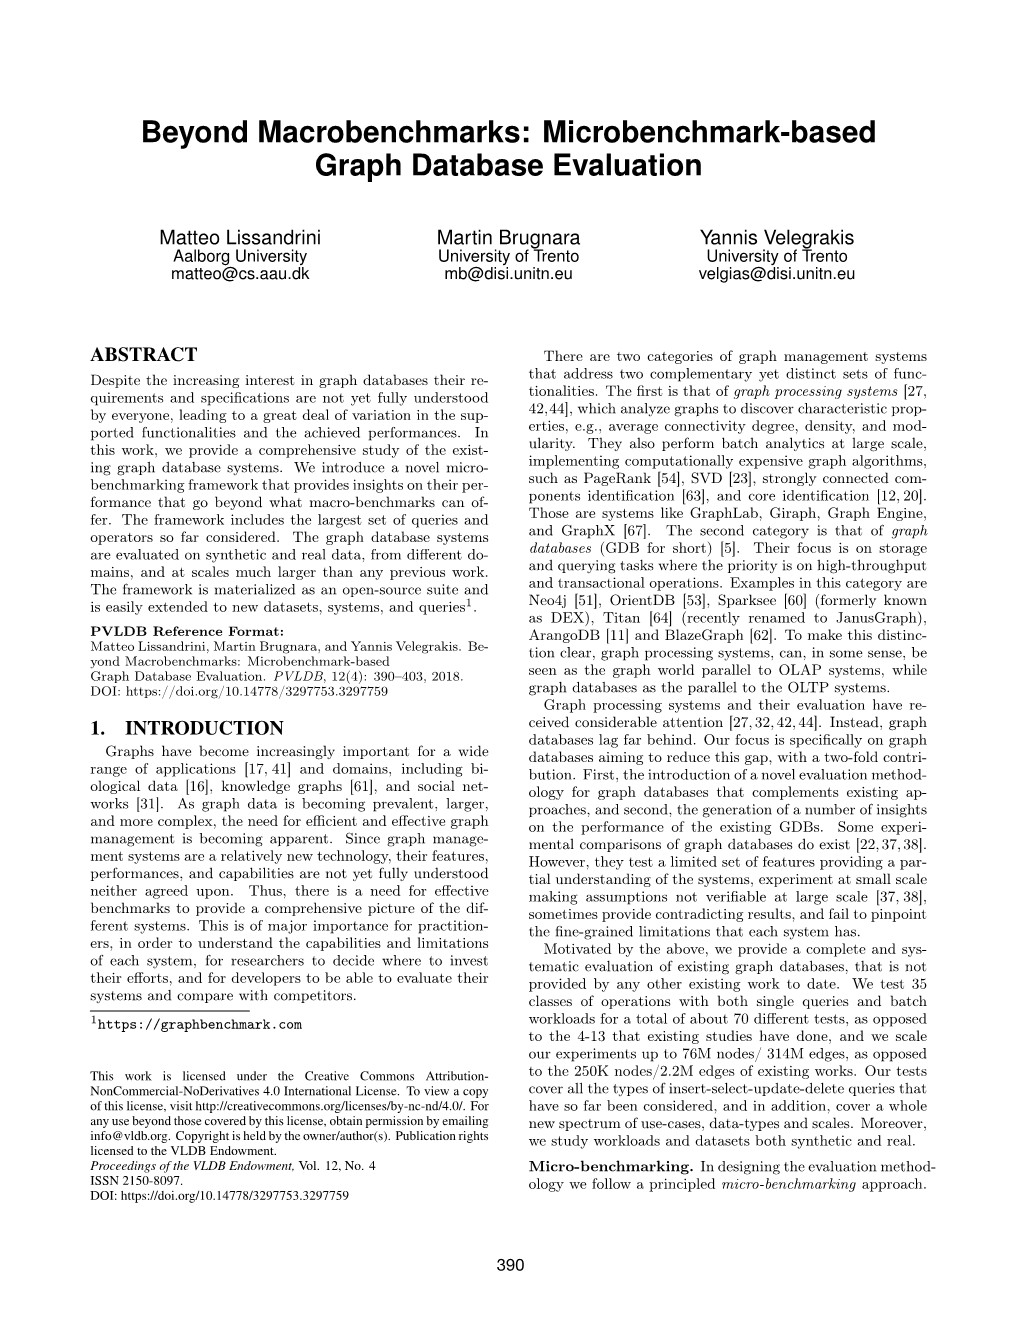 Microbenchmark-Based Graph Database Evaluation